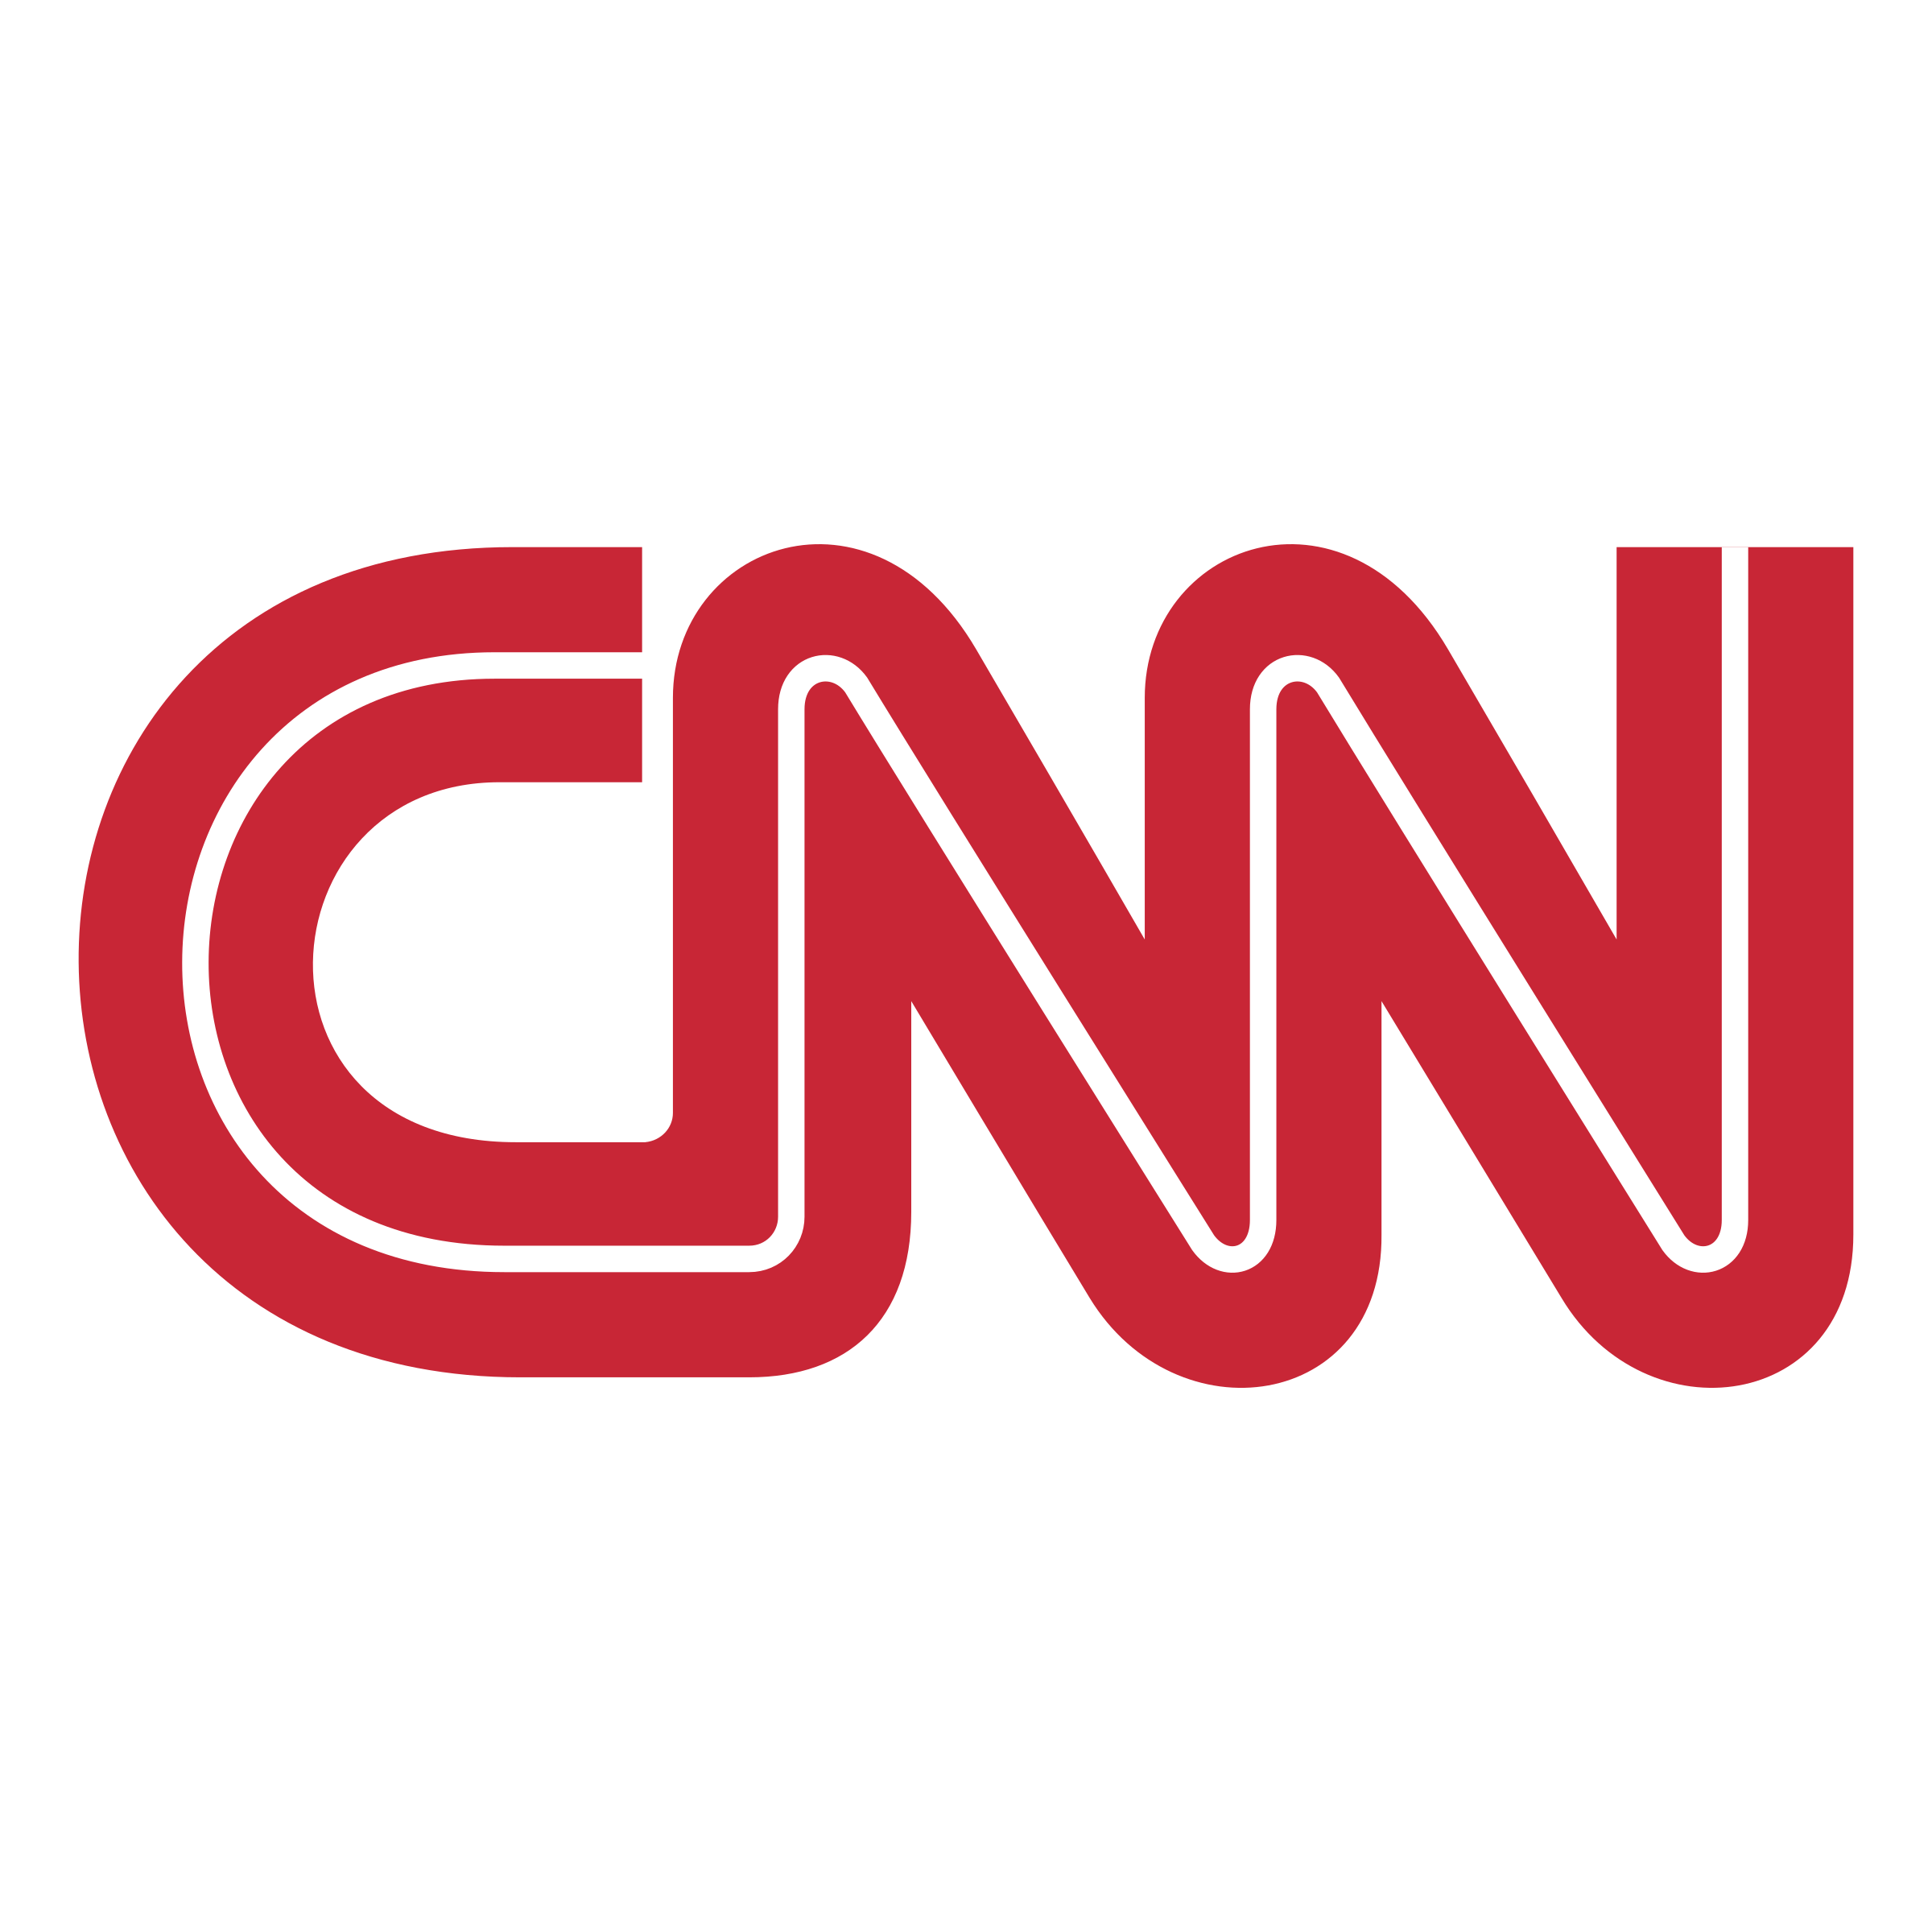 cnn-1-logo-png-transparent.png